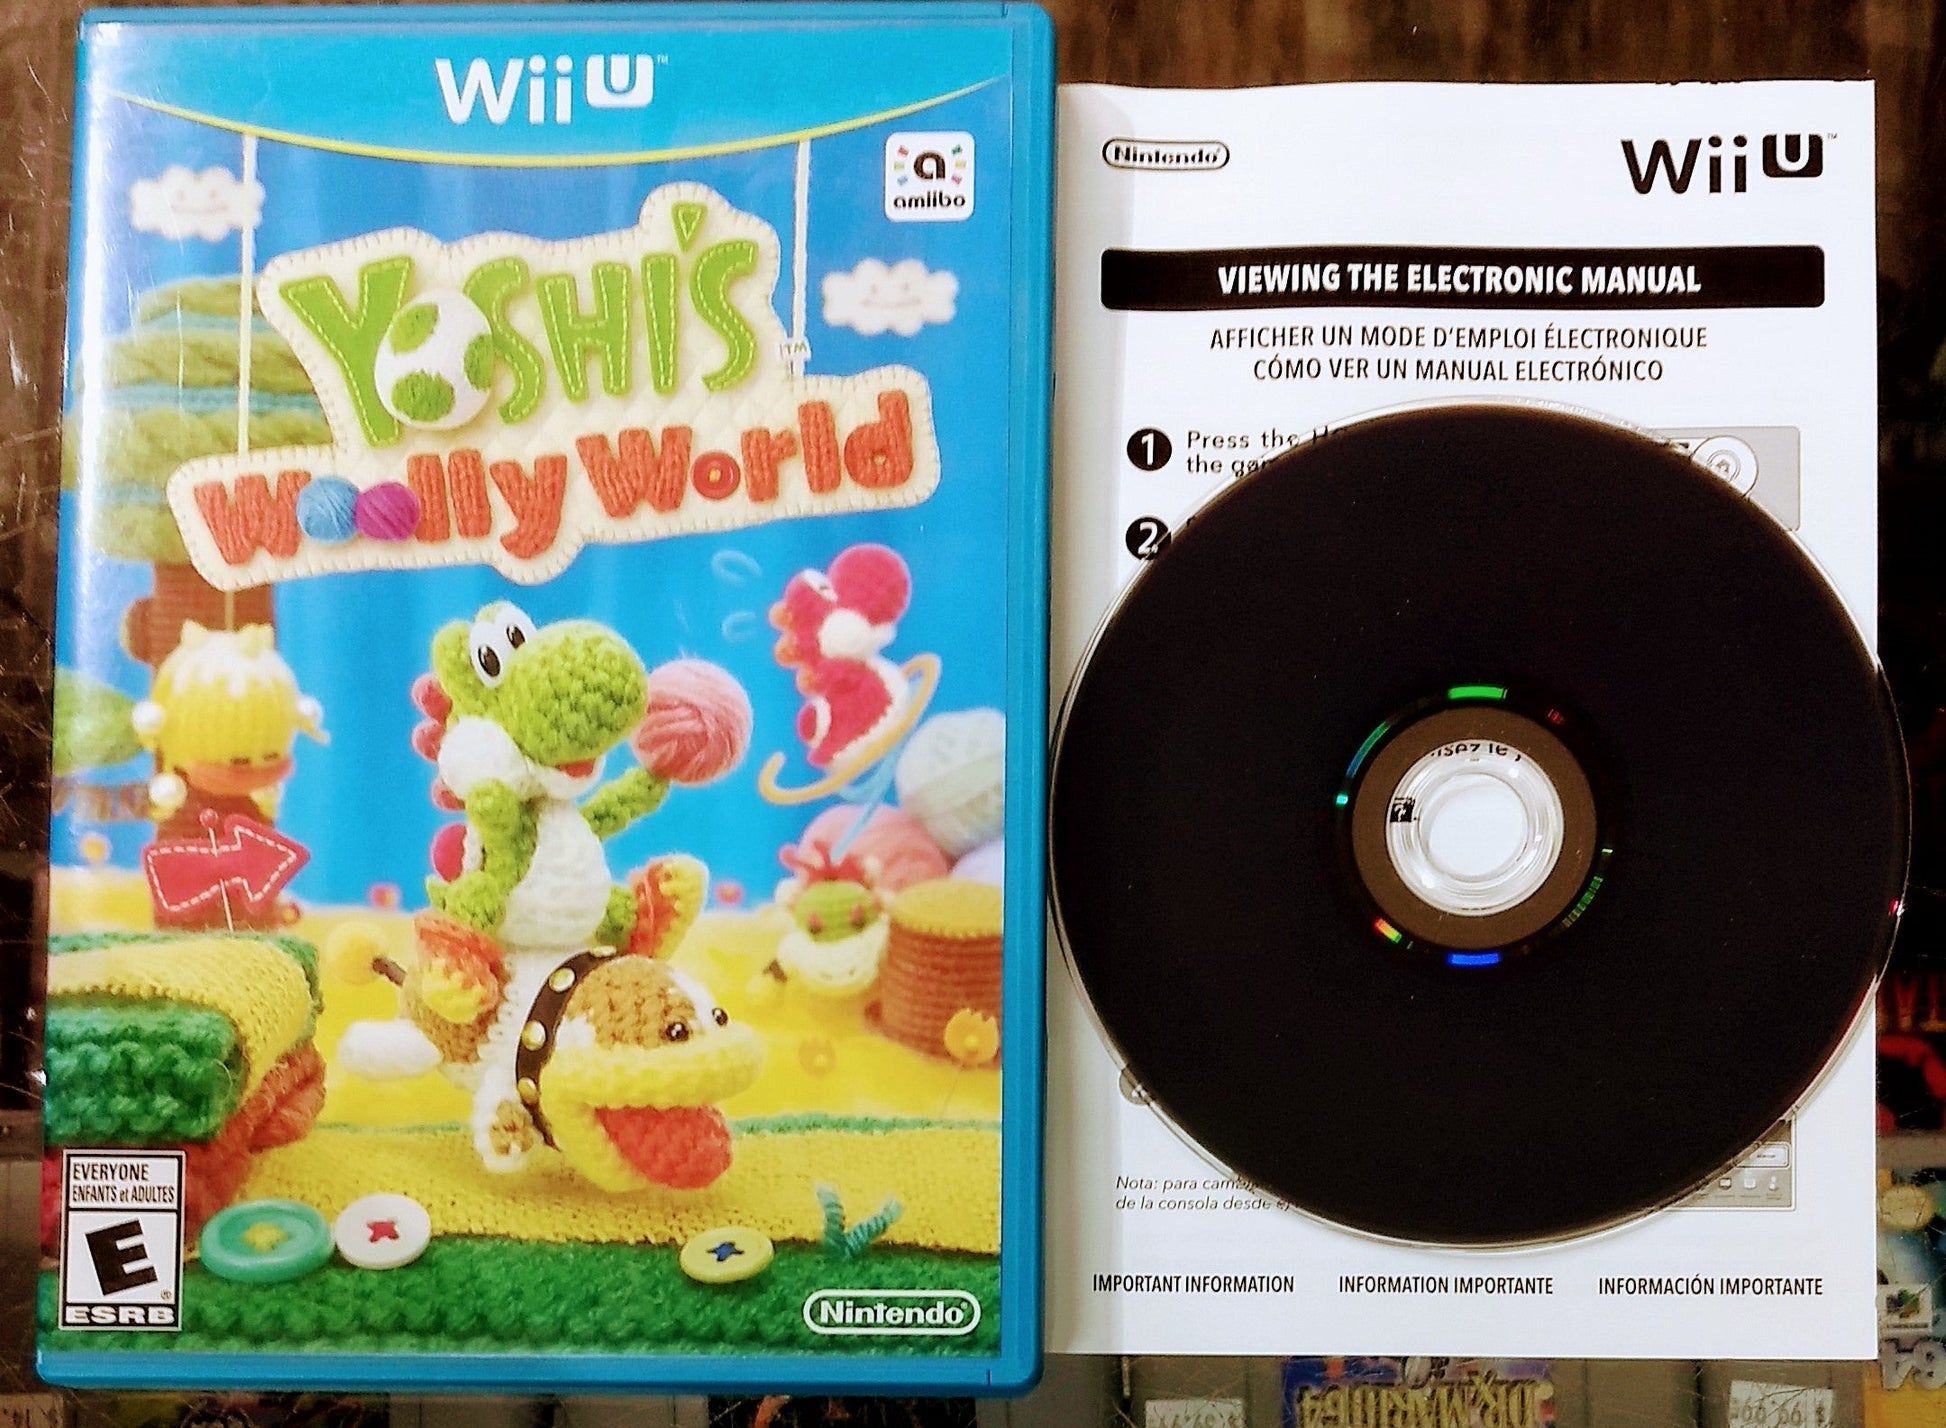 YOSHI'S WOOLLY WORLD (NINTENDO WIIU) - jeux video game-x